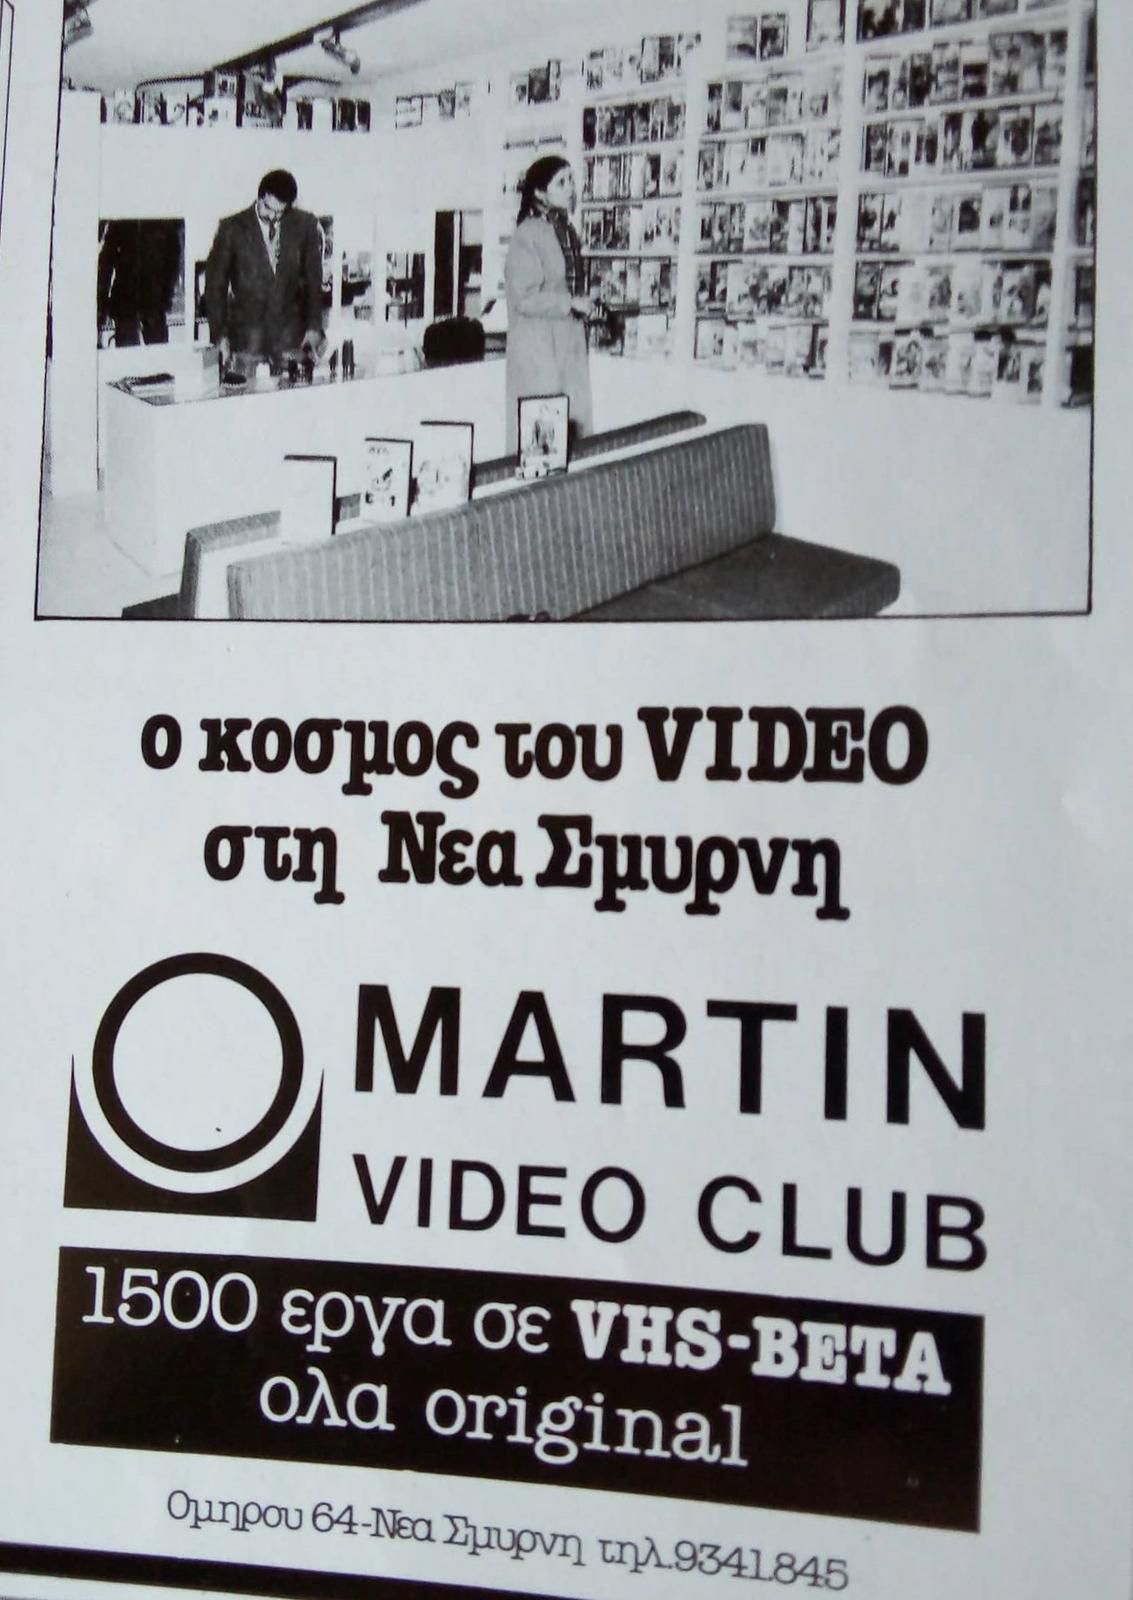 Martin Video Club